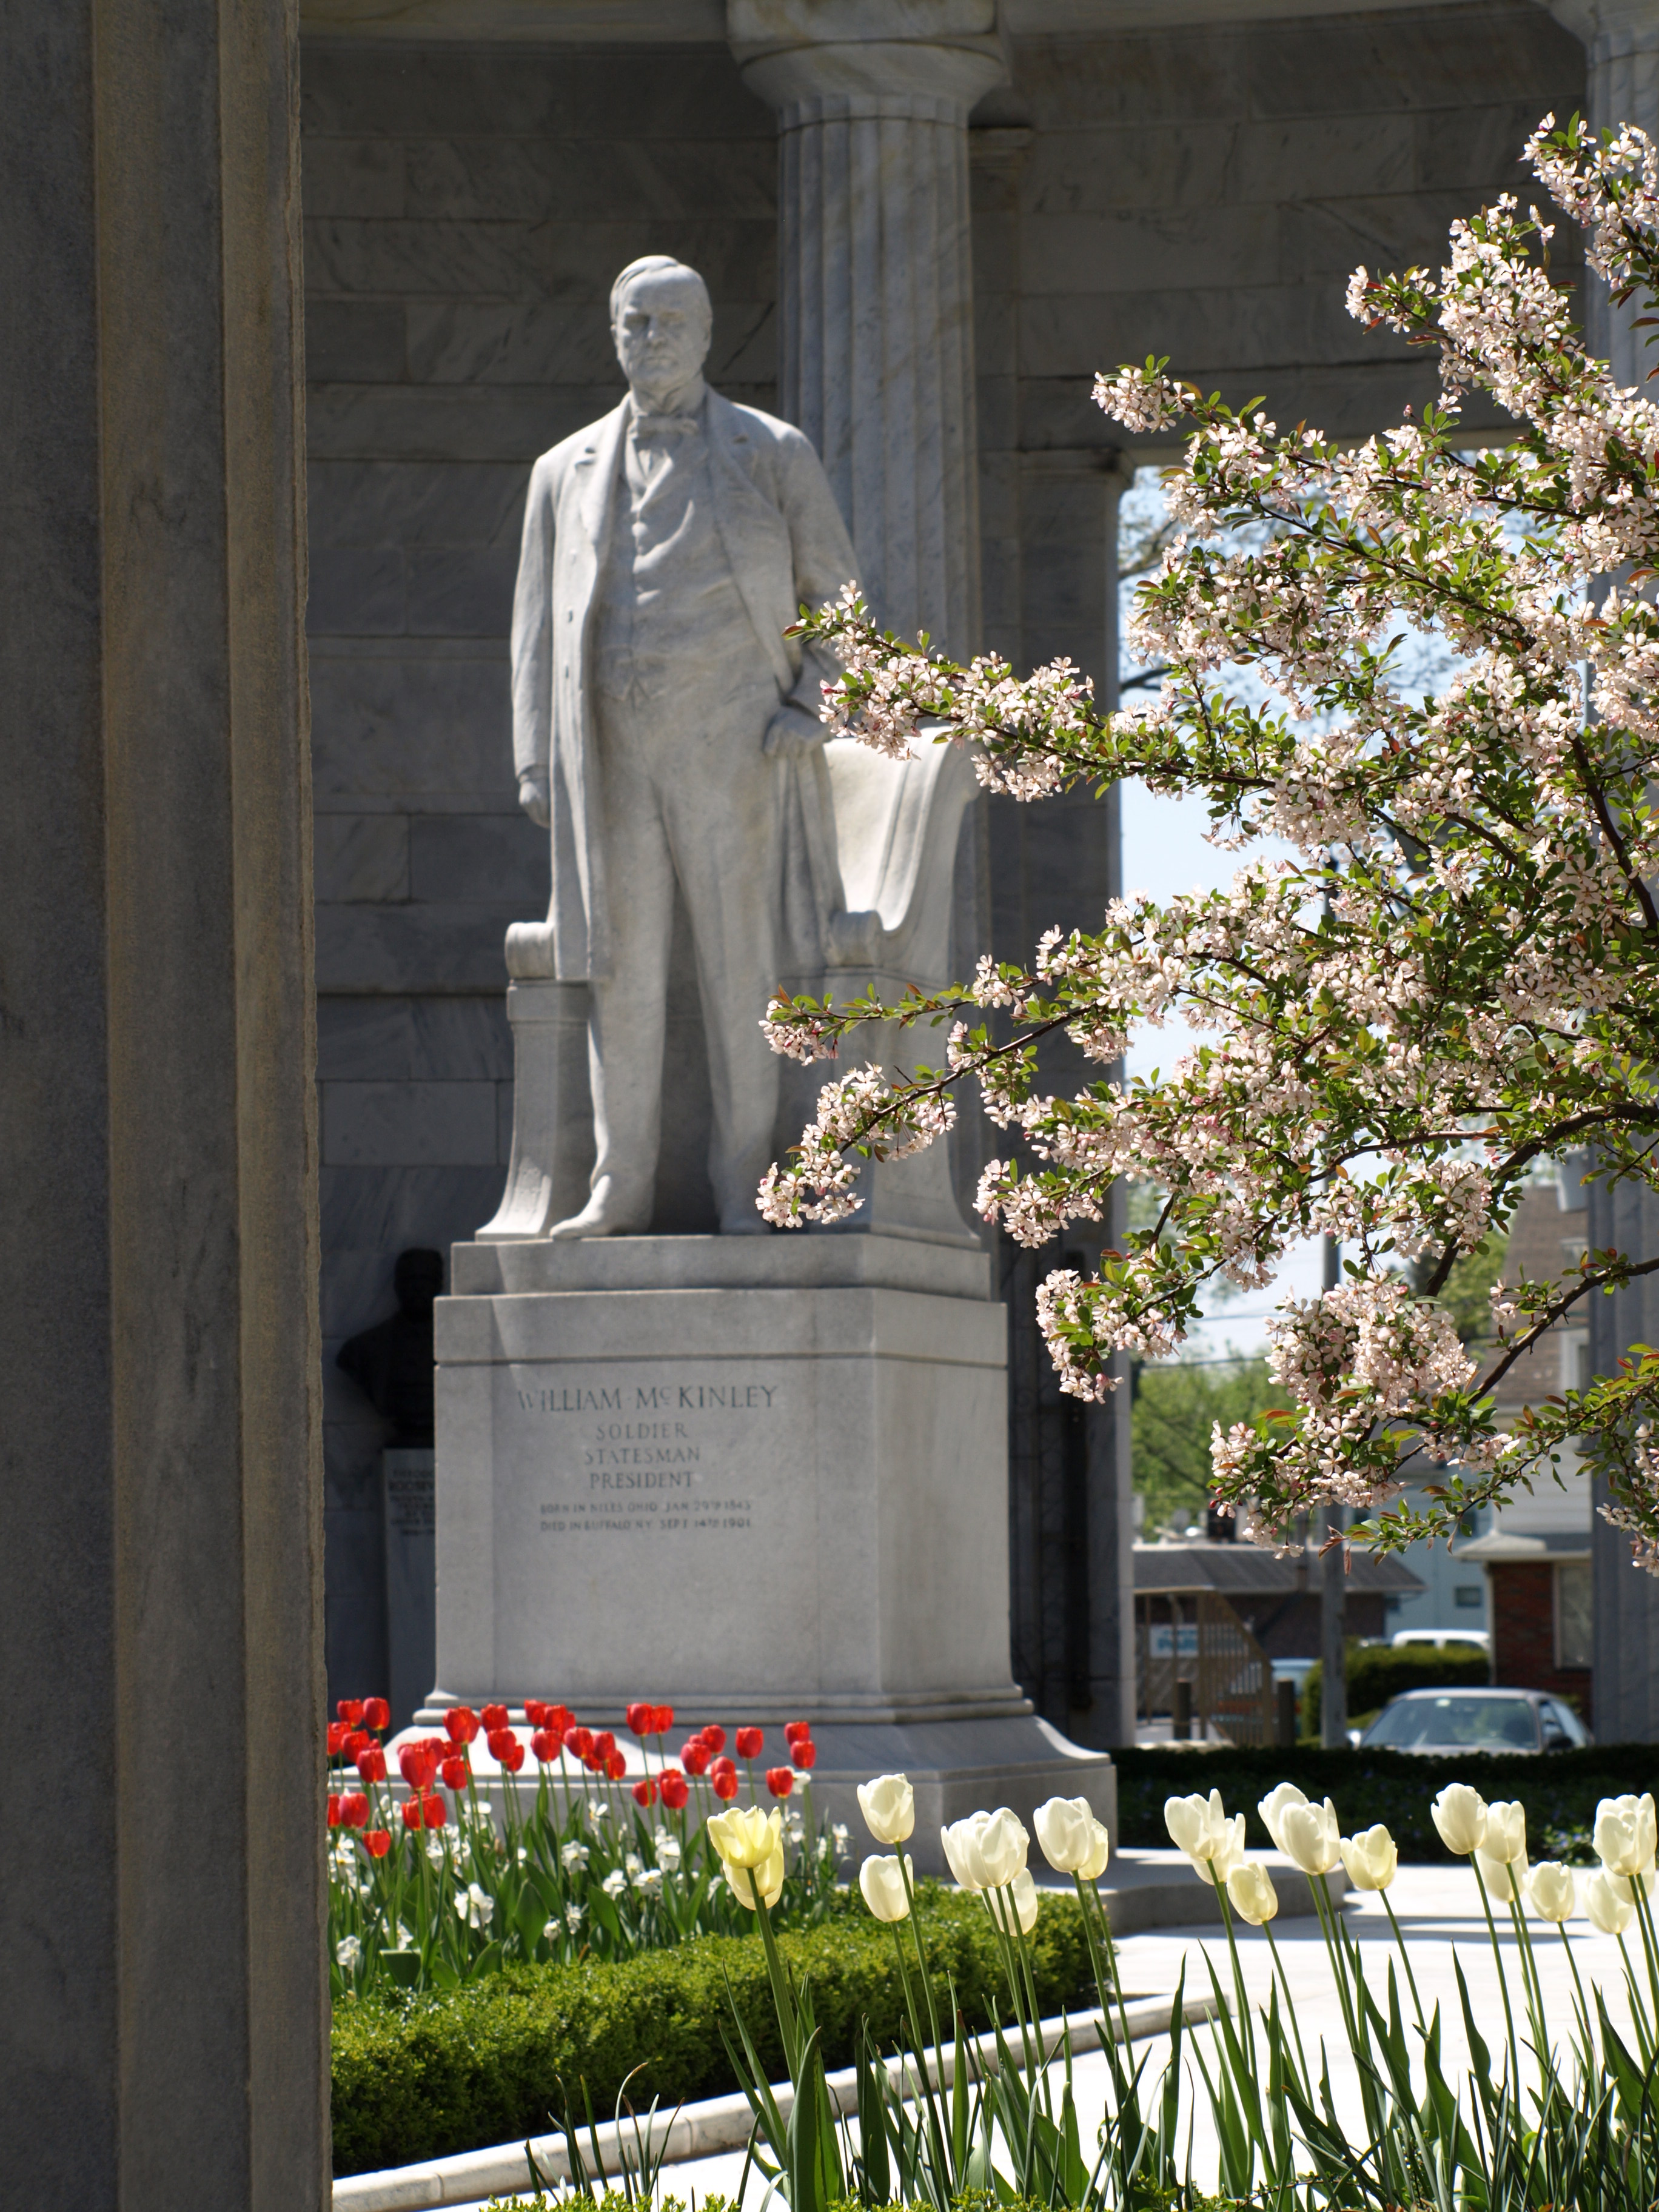 The National McKinley Memorial in Niles Ohio